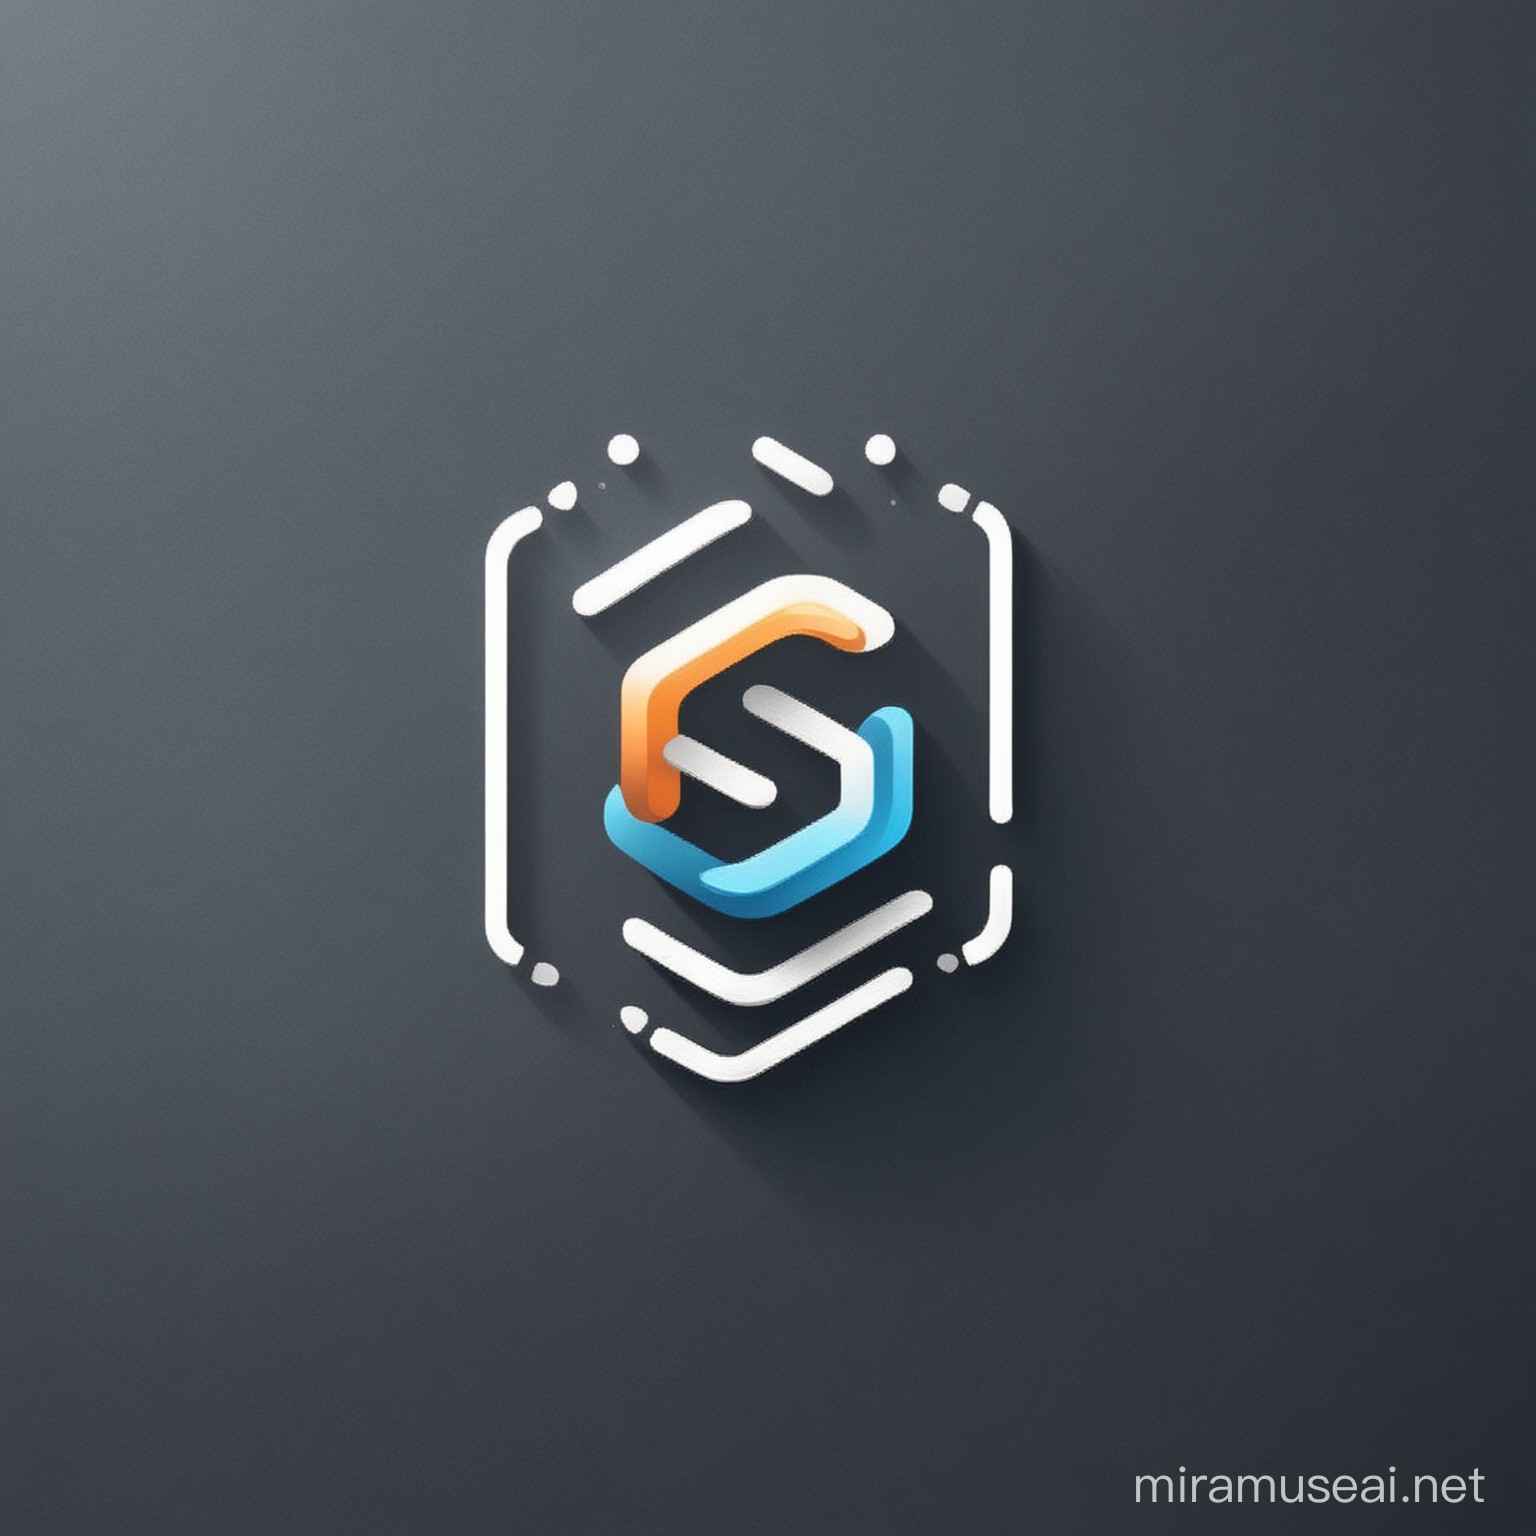 Innovative Software Solutions Logo Design Symbolizing CuttingEdge Technology and Creativity